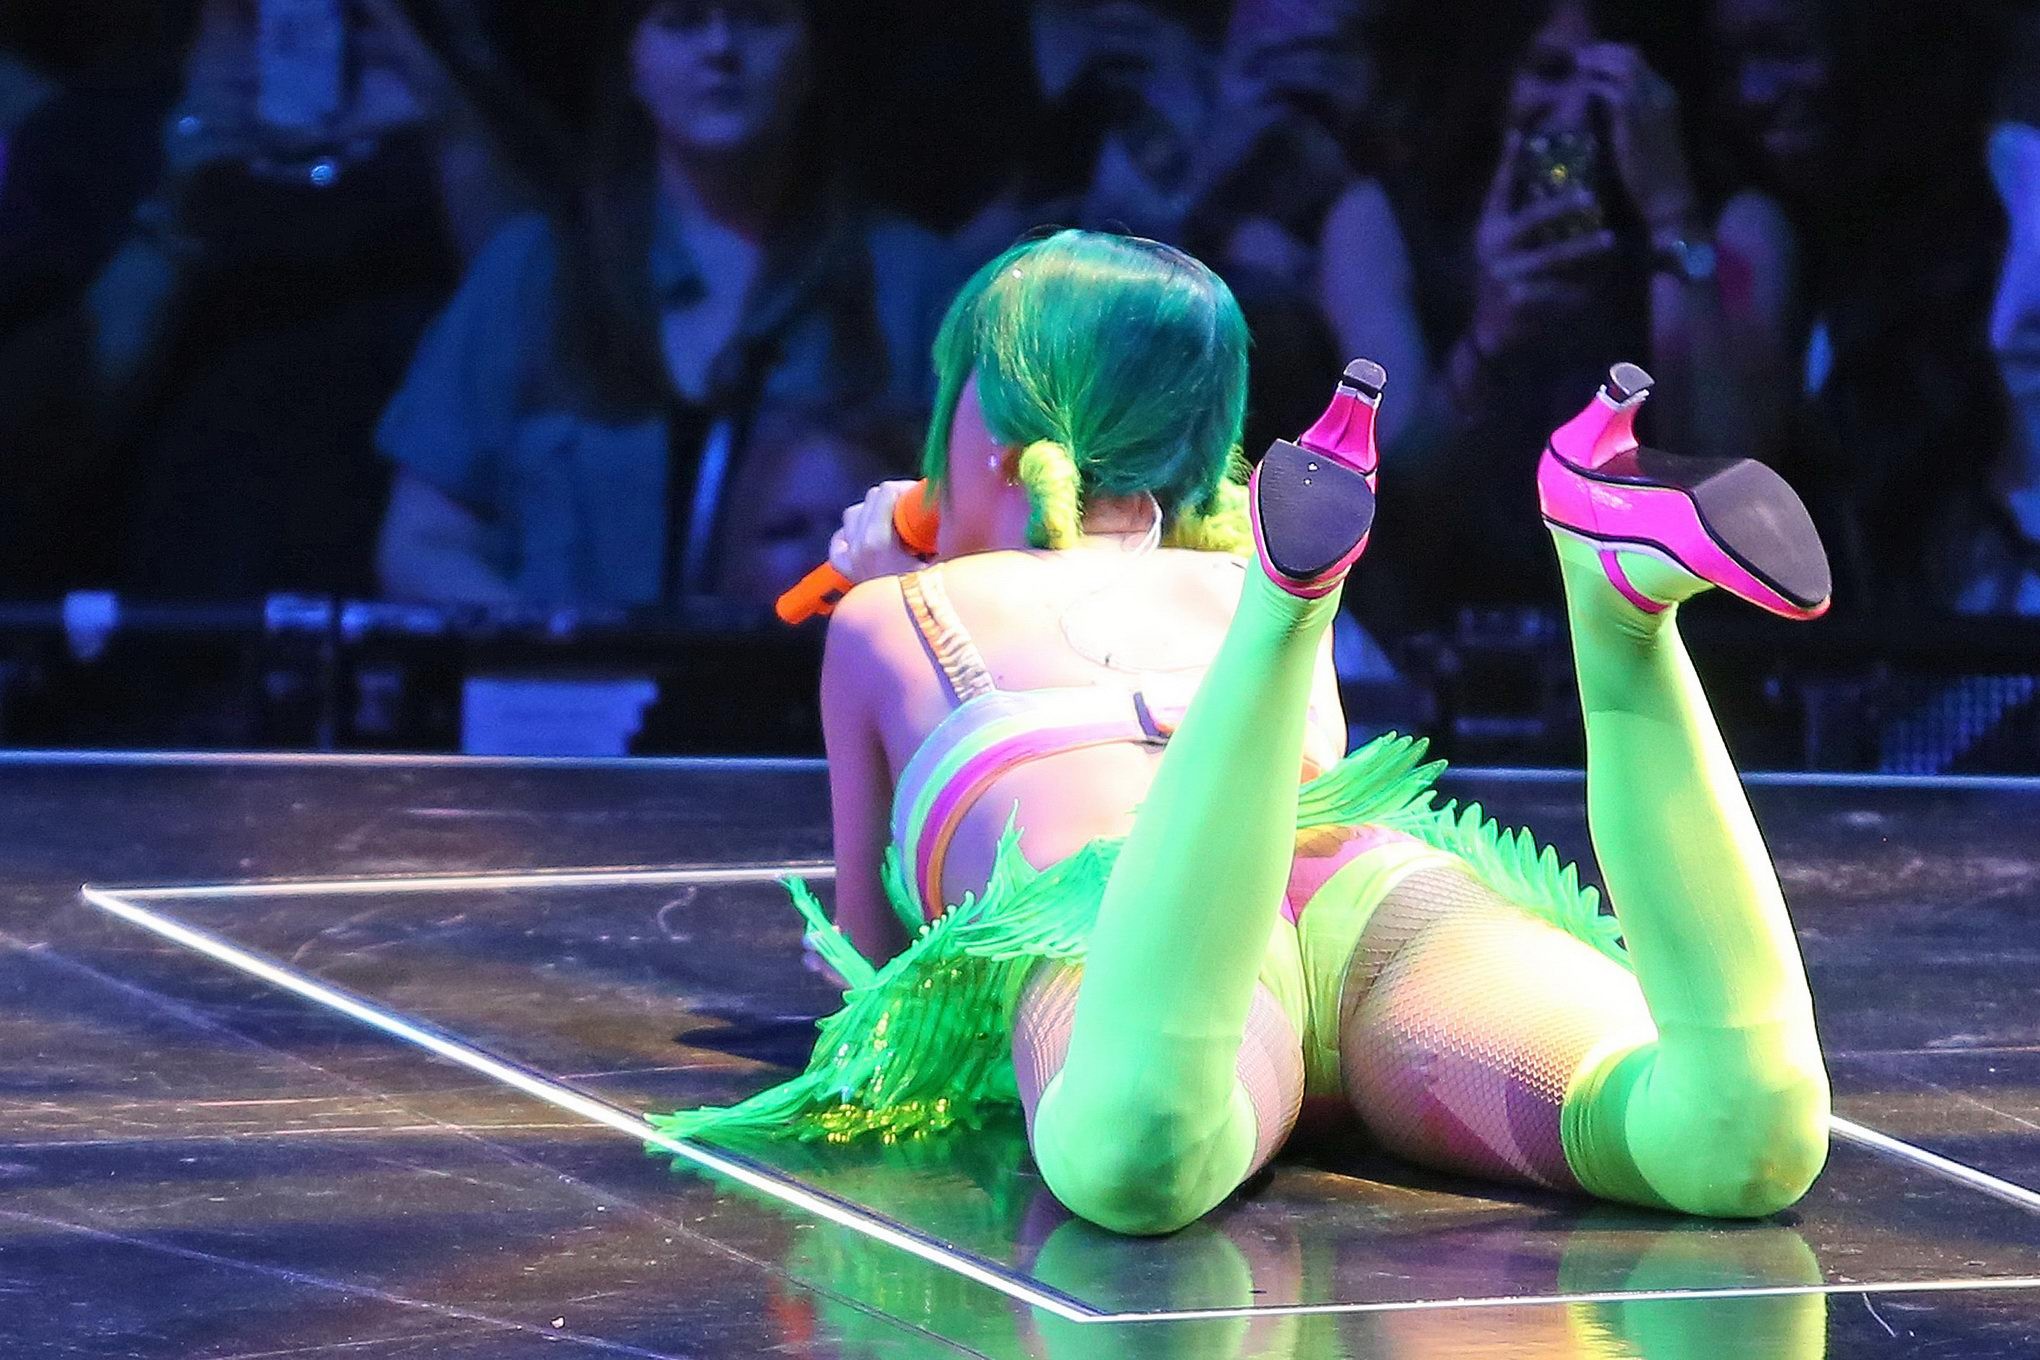 Katy perry guardando come un personaggio hentai busty al suo tour prismatico concerto i
 #75182301